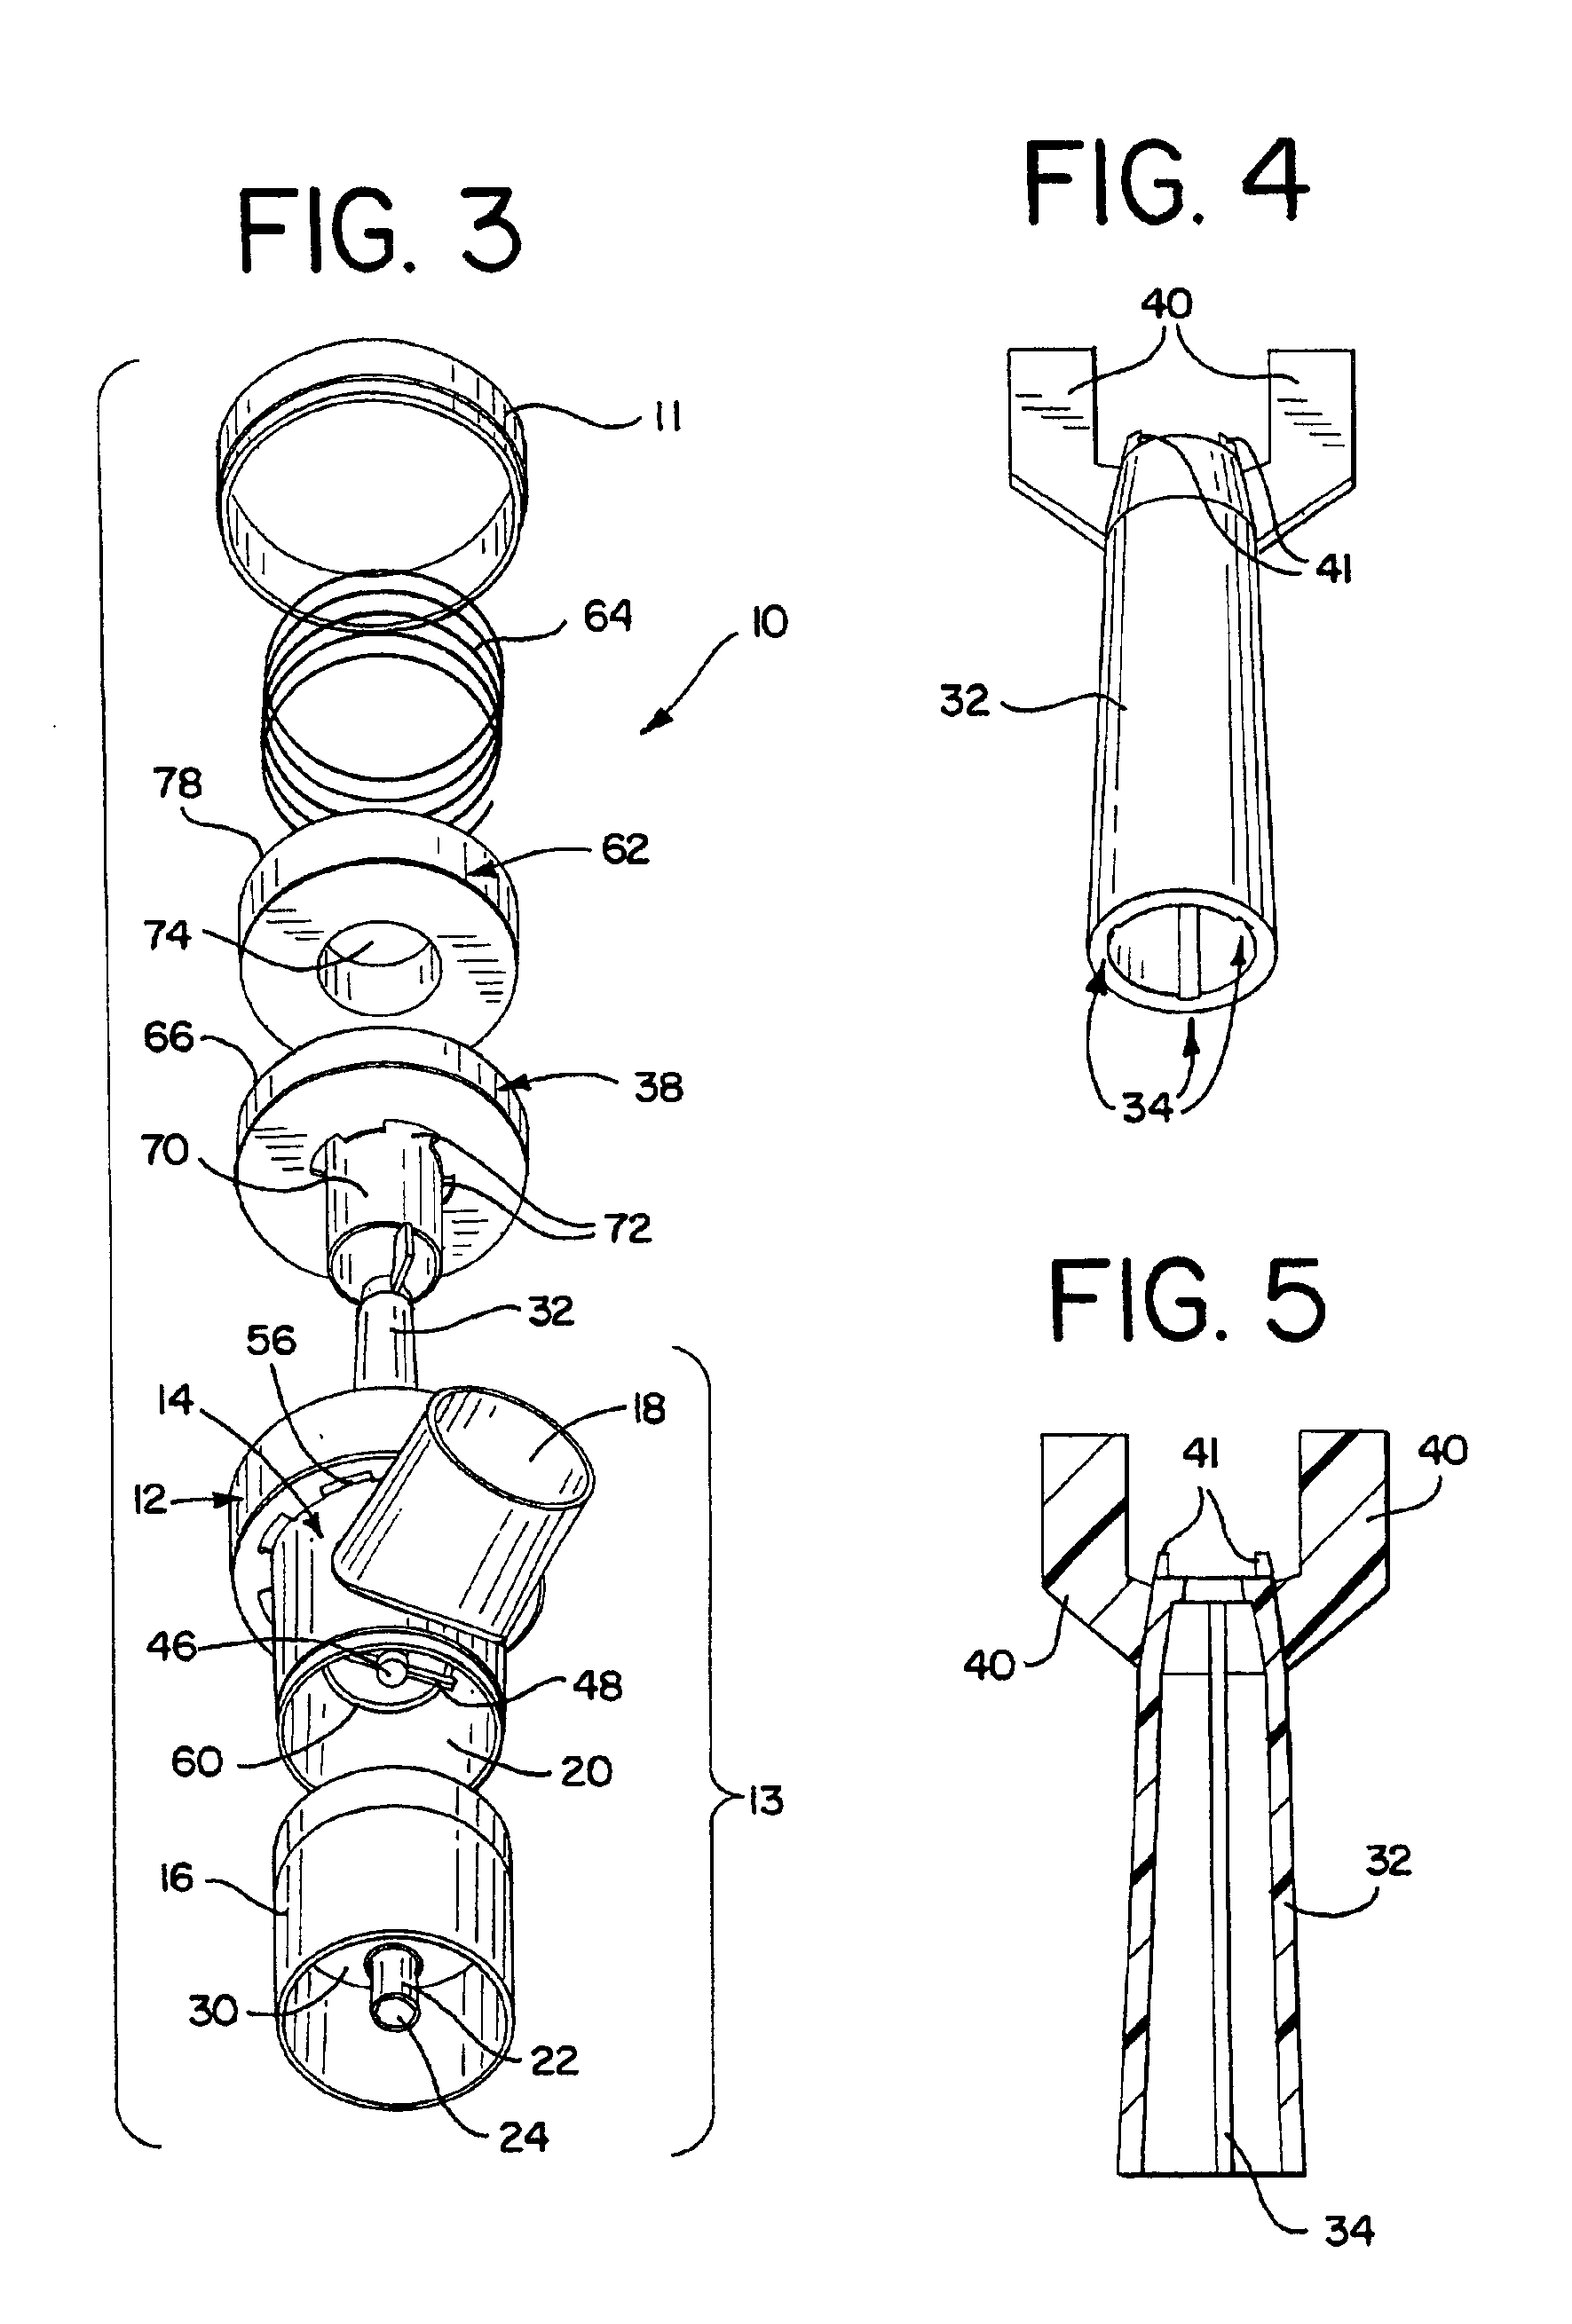 Nebulizer apparatus and method